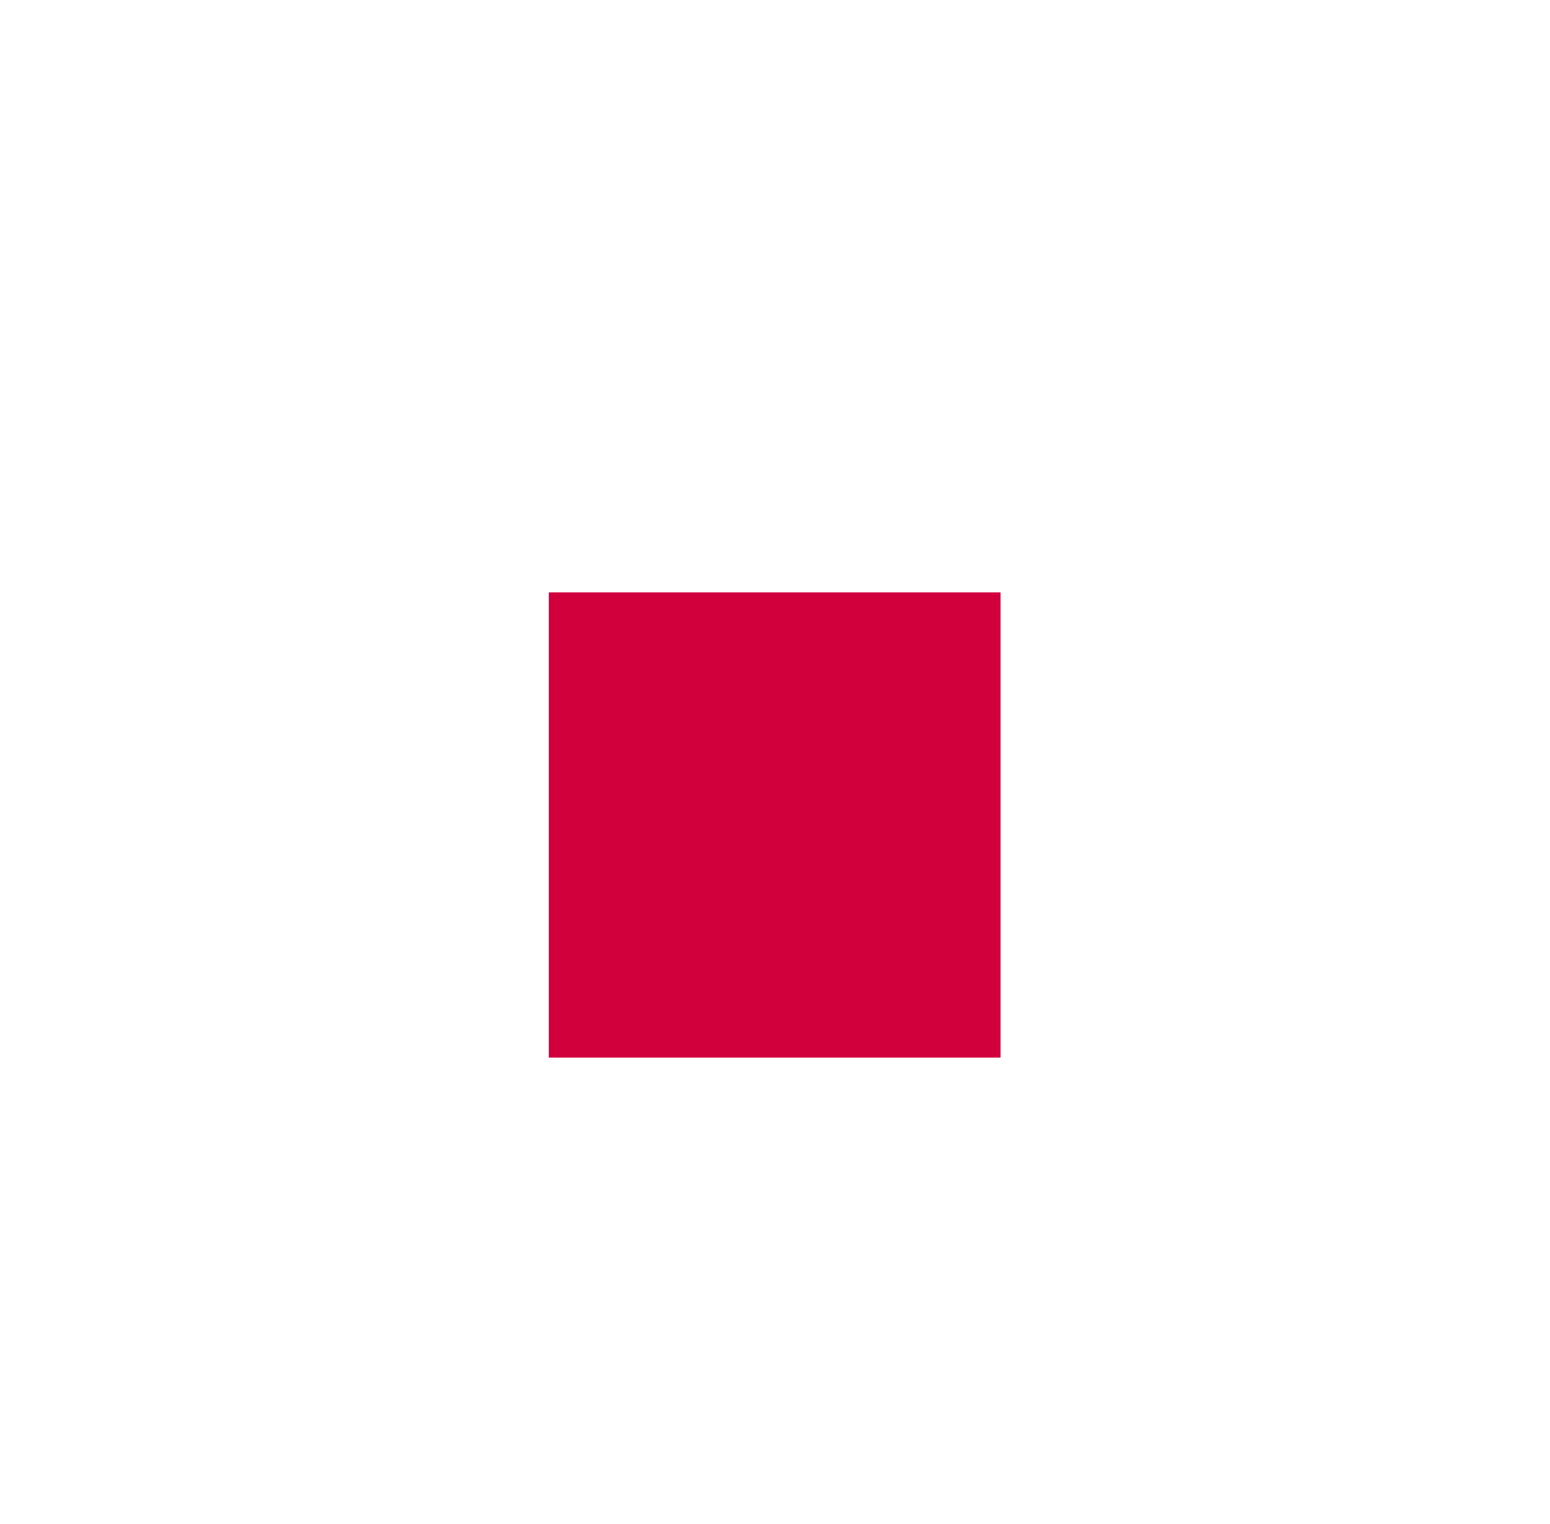 Shurgard Self Storage logo pour fonds sombres (PNG transparent)